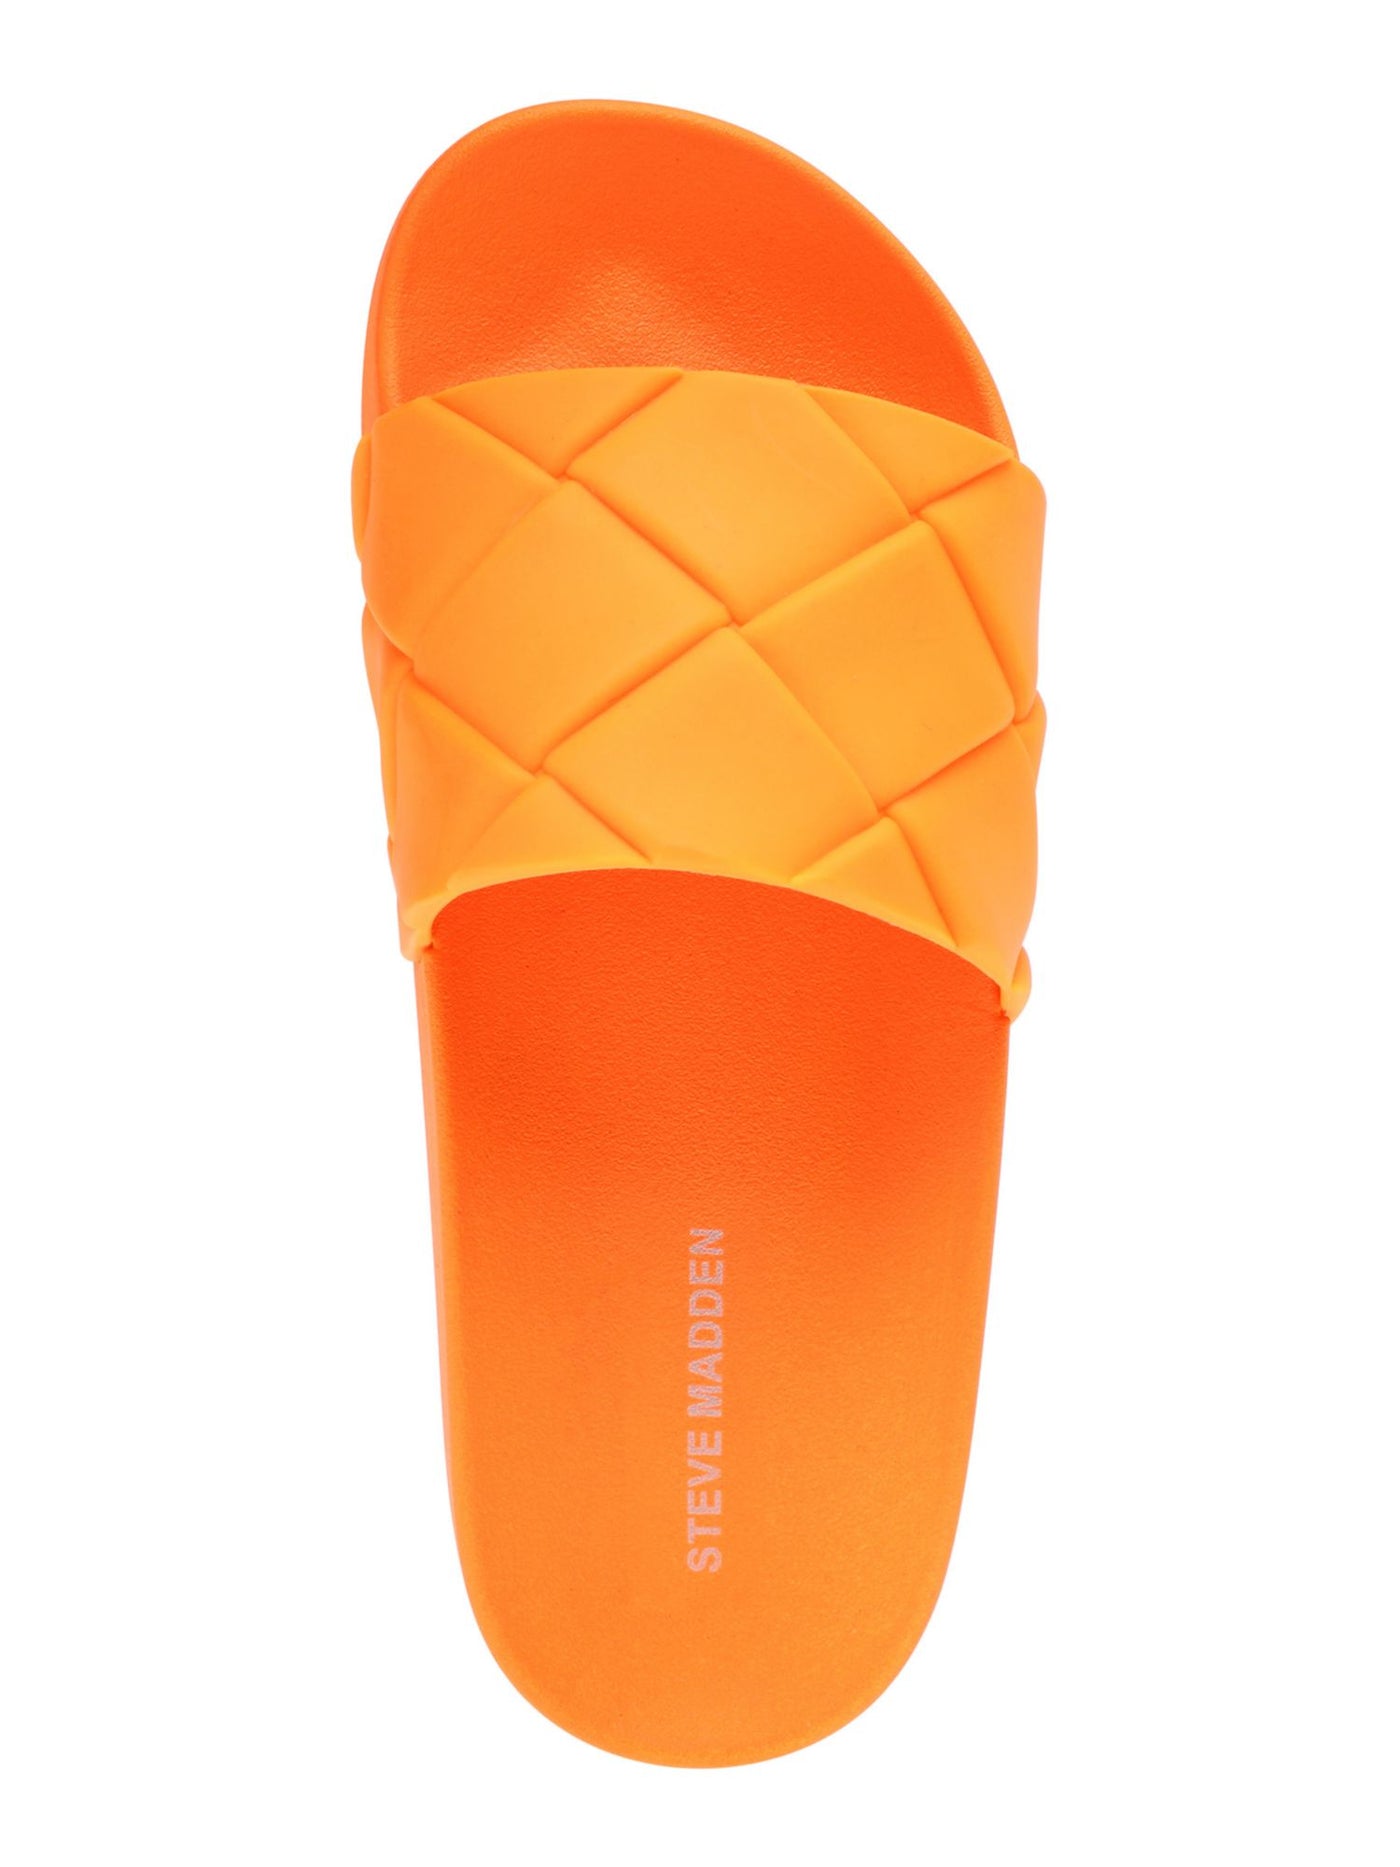 STEVE MADDEN Womens Orange Quilted Sporty Pool Slides Woven Soulful Round Toe Platform Slip On Slide Sandals Shoes M